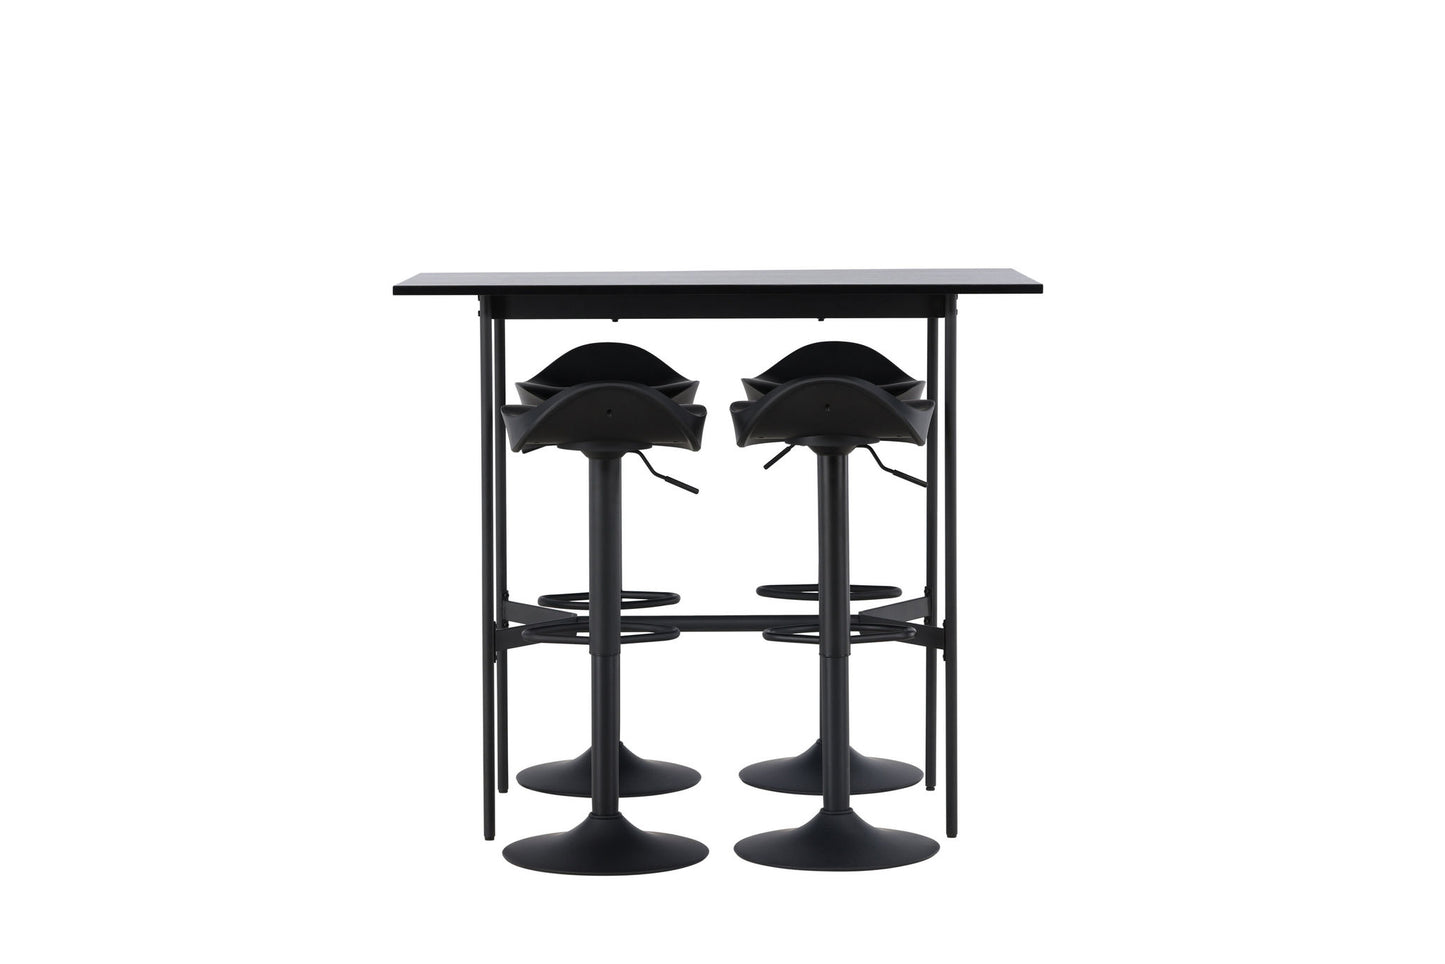 Rax Bar Table 120*60 - Sort / sort MDF +Adesto Bar Chair - Black / Matte sort ABS _4